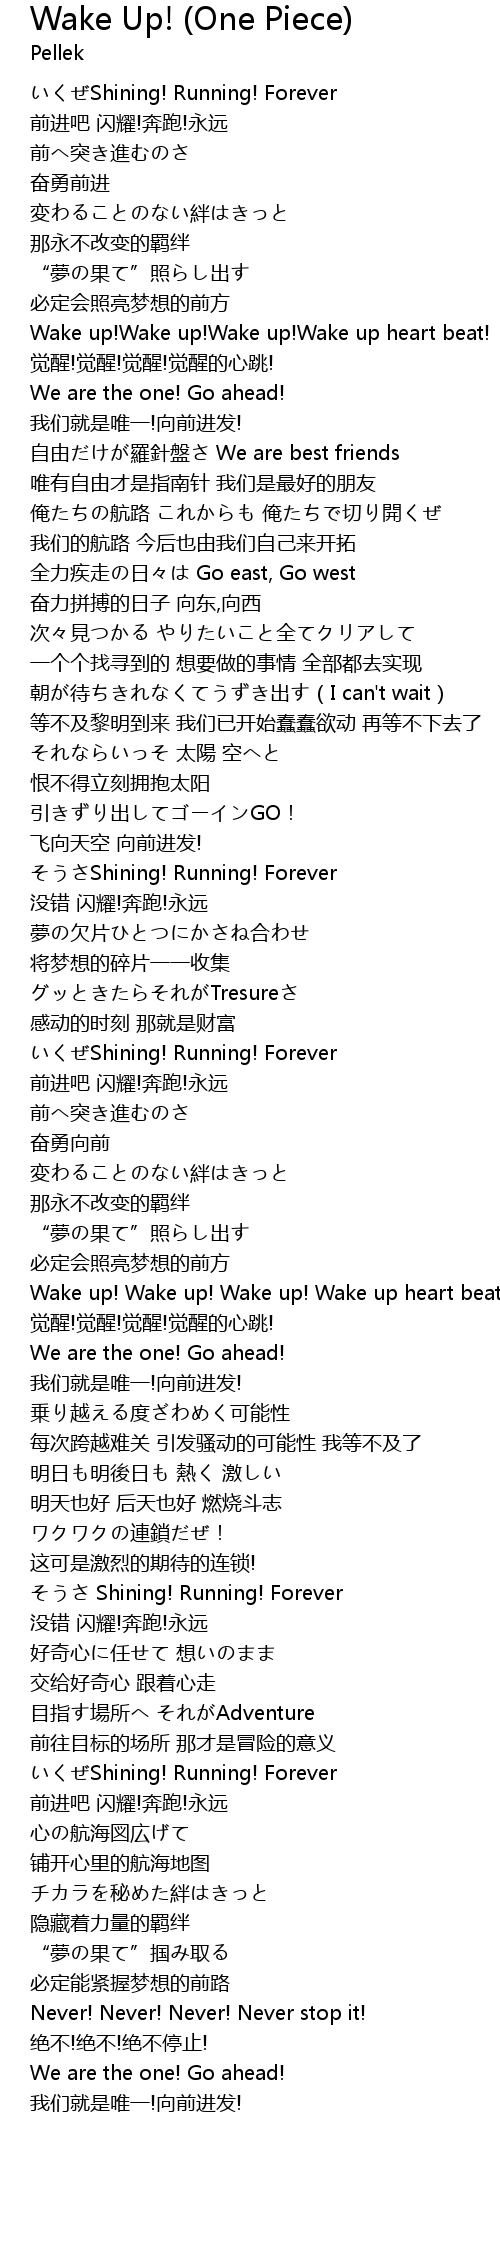 Wake Up One Piece Lyrics Follow Lyrics